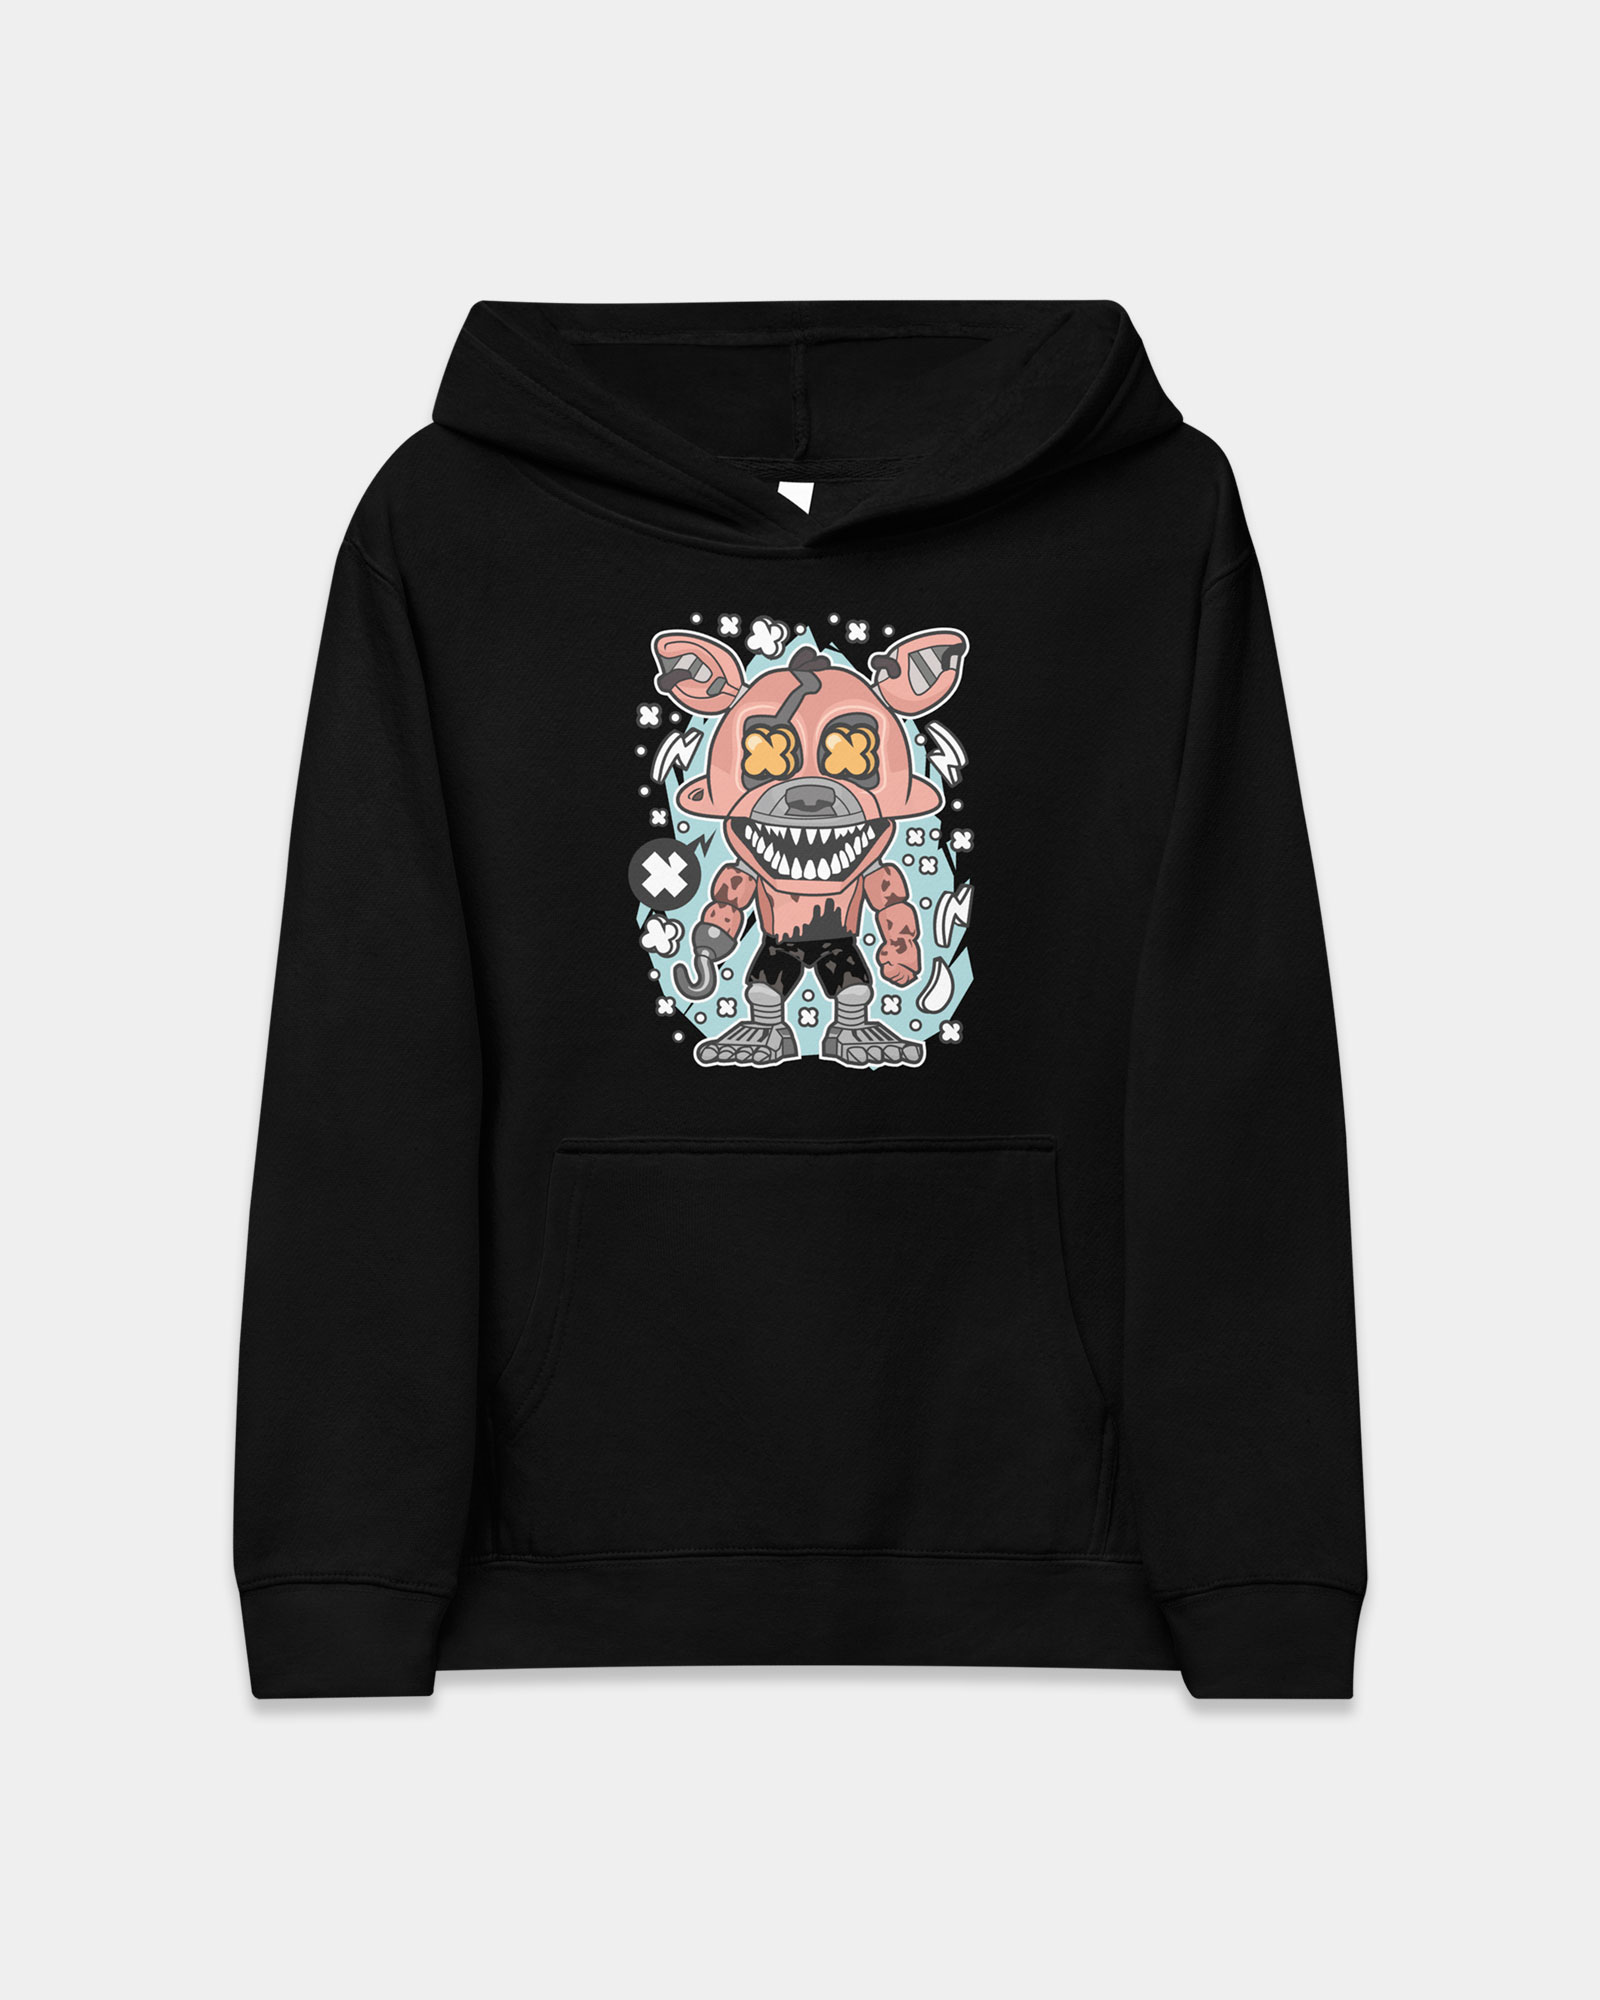 Nightmare foxy hoodie